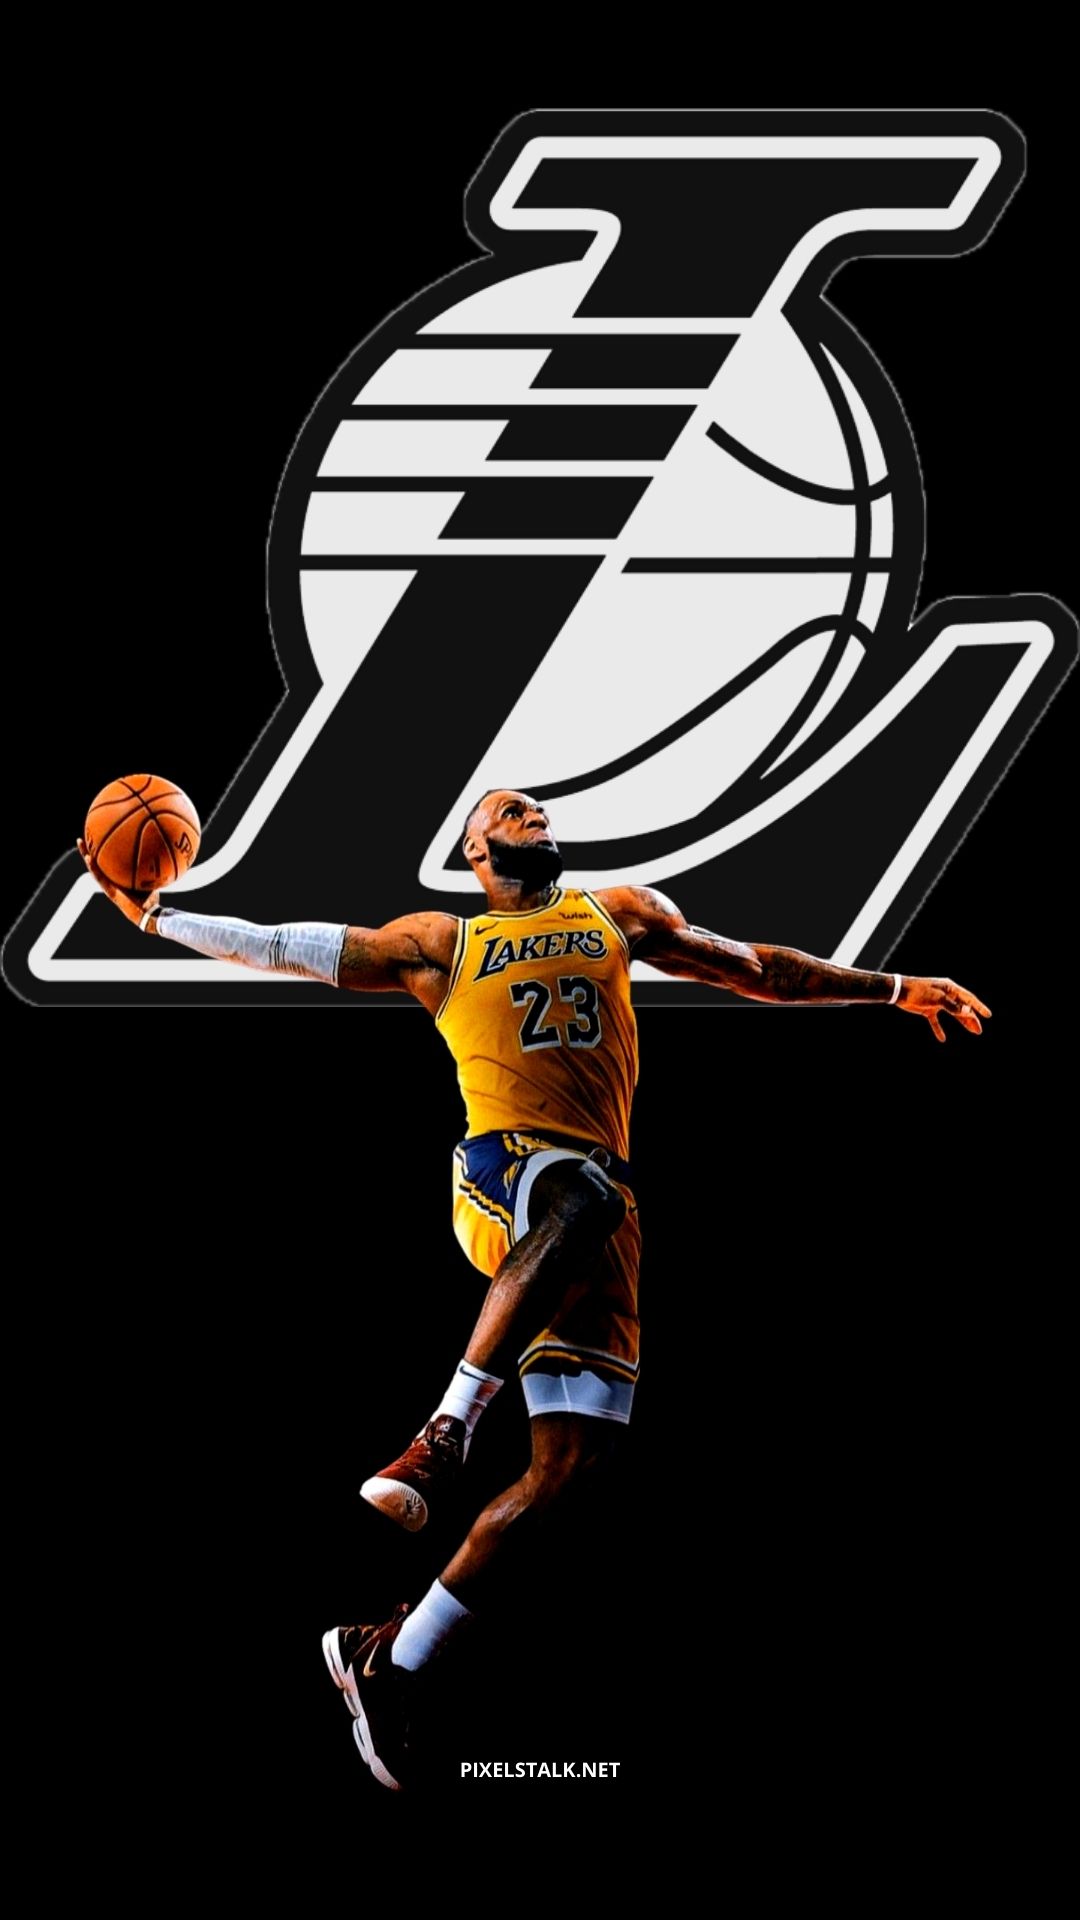 Download NBA iPhone Lebron James Dunk Wallpaper | Wallpapers.com